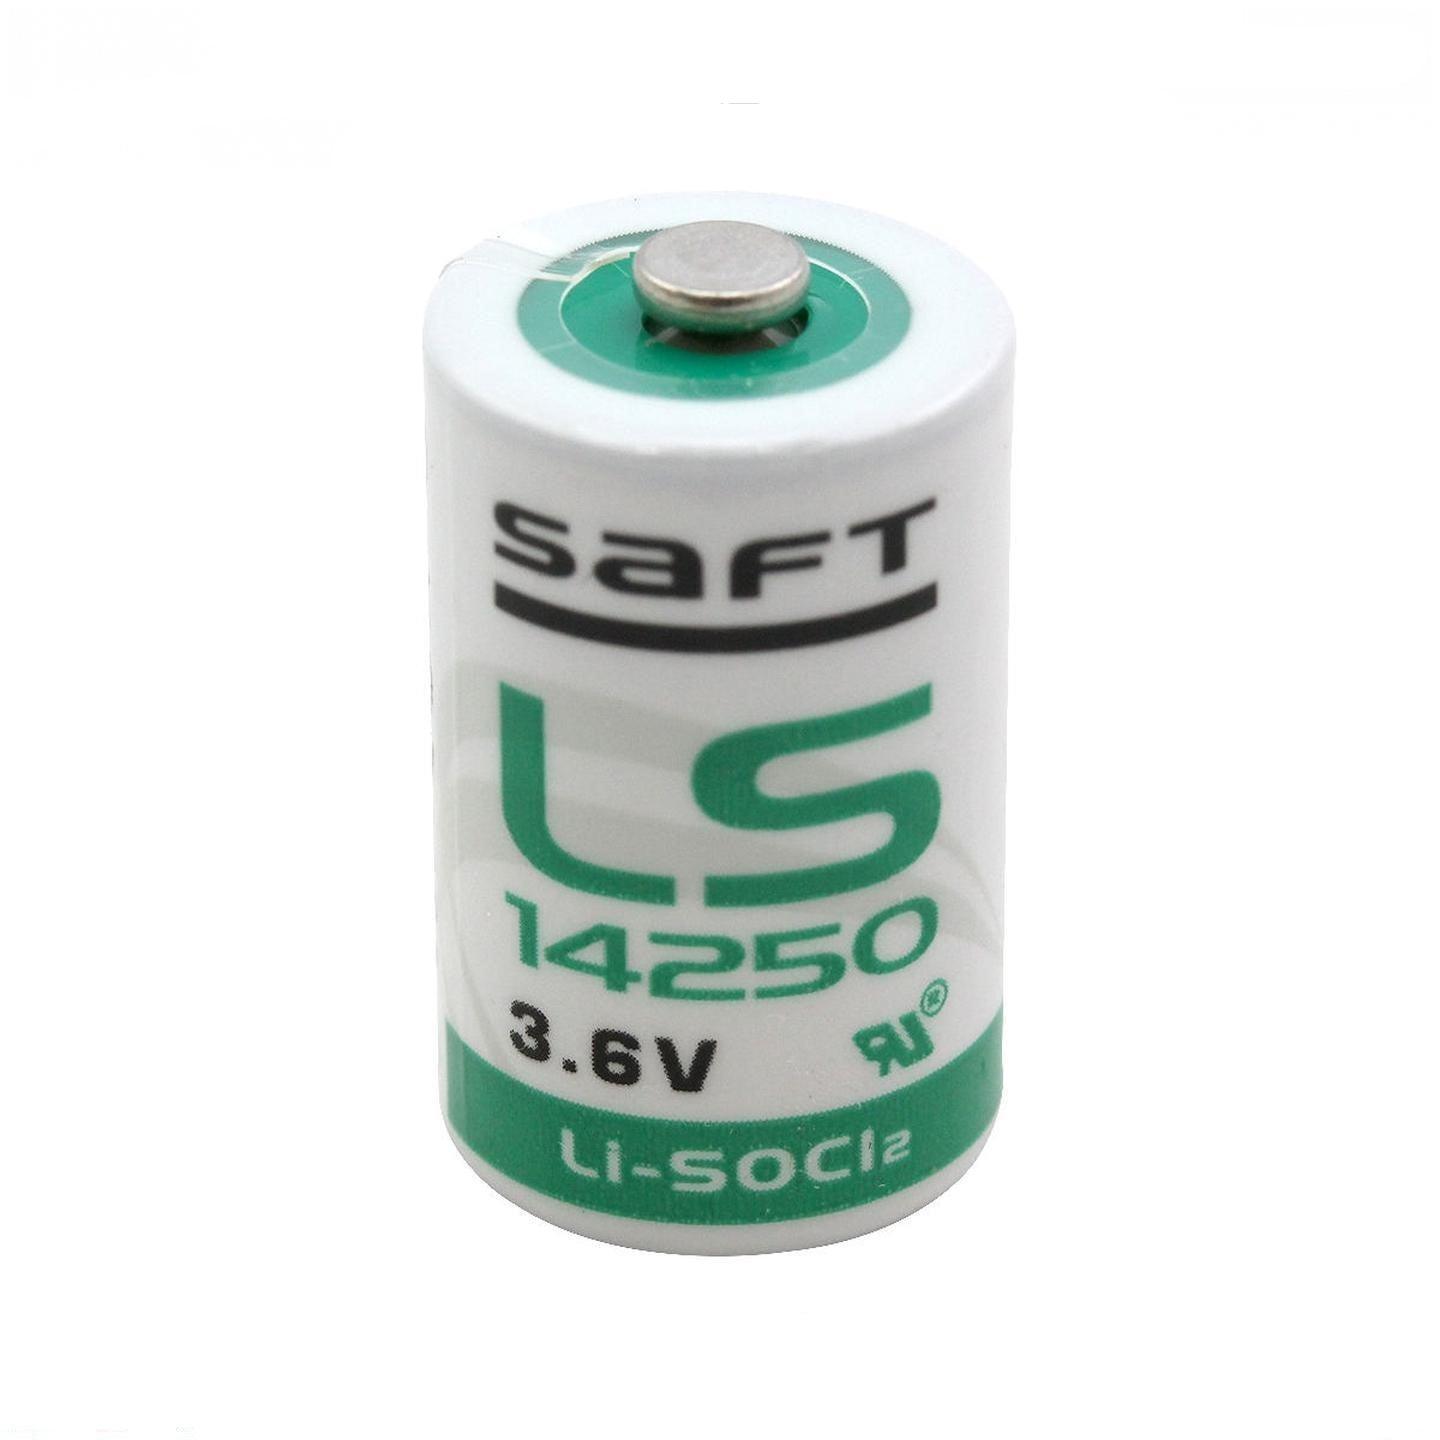 2 Pack | Saft LS14250 ER14250 3.6V Lithium Battery 1/2AA R6 Li-SOCl2 nipple top battery - Office Catch